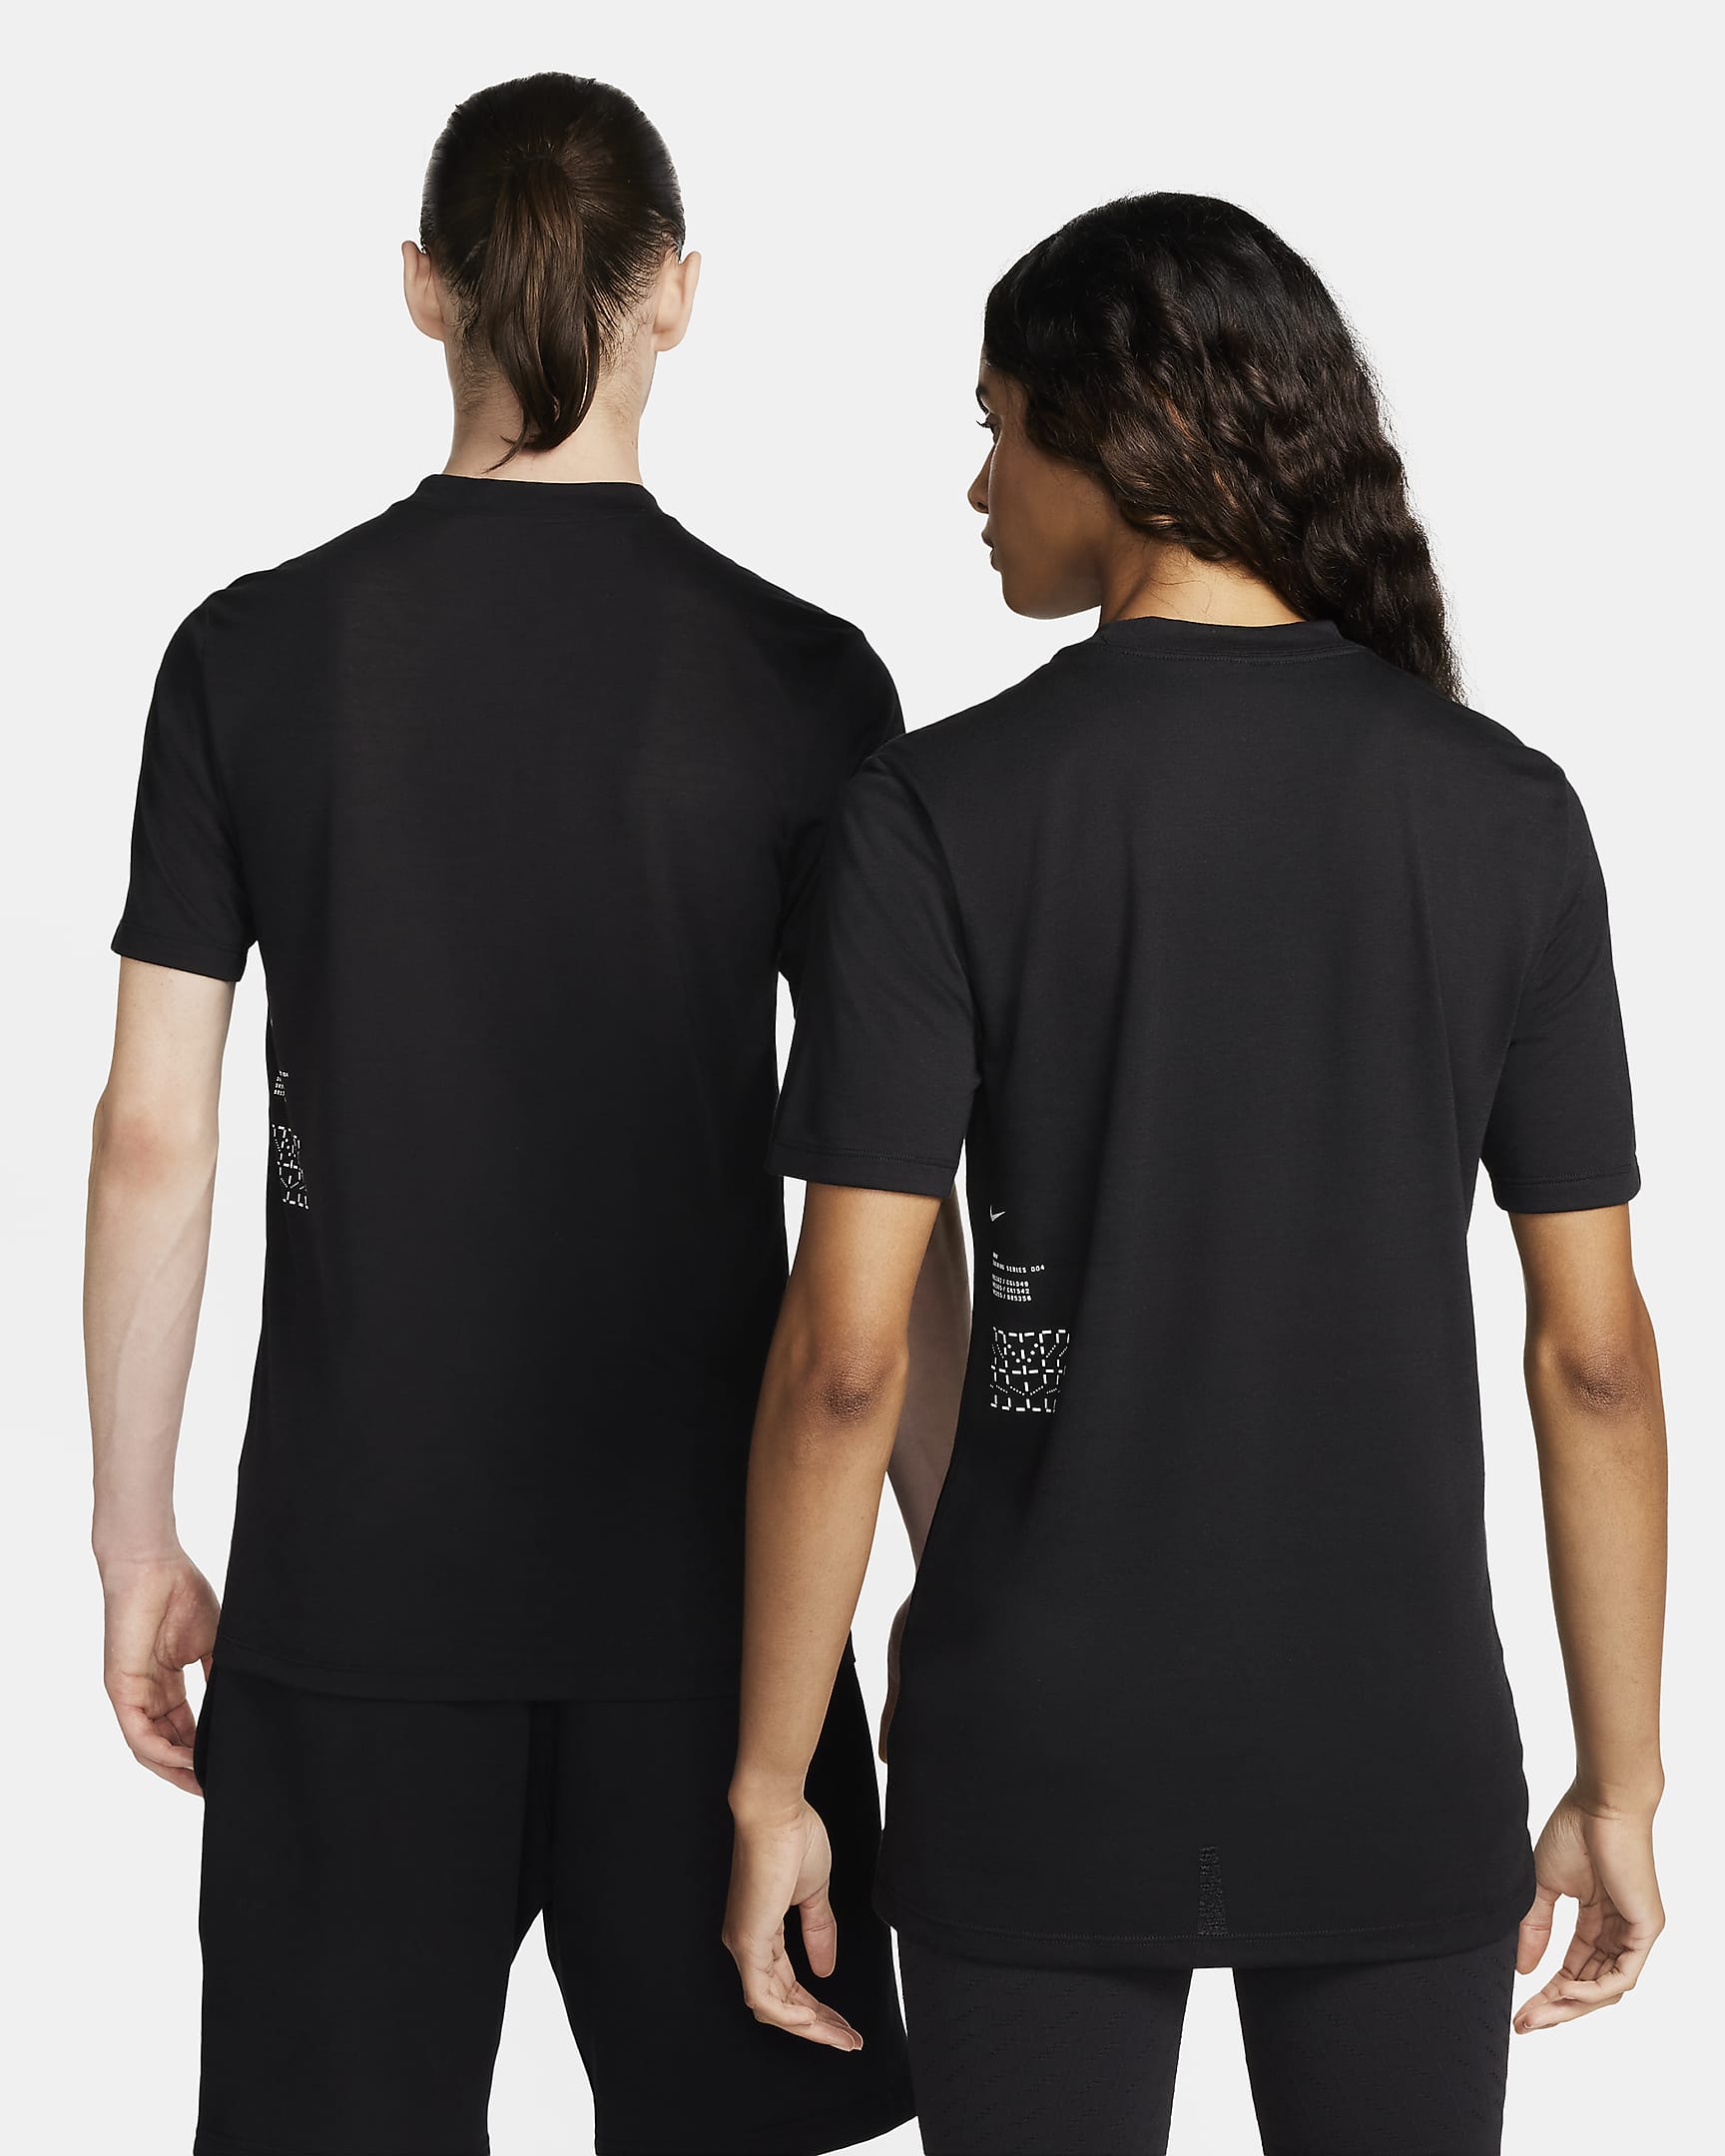 Nike x MMW Men's Short-Sleeve Top - Black